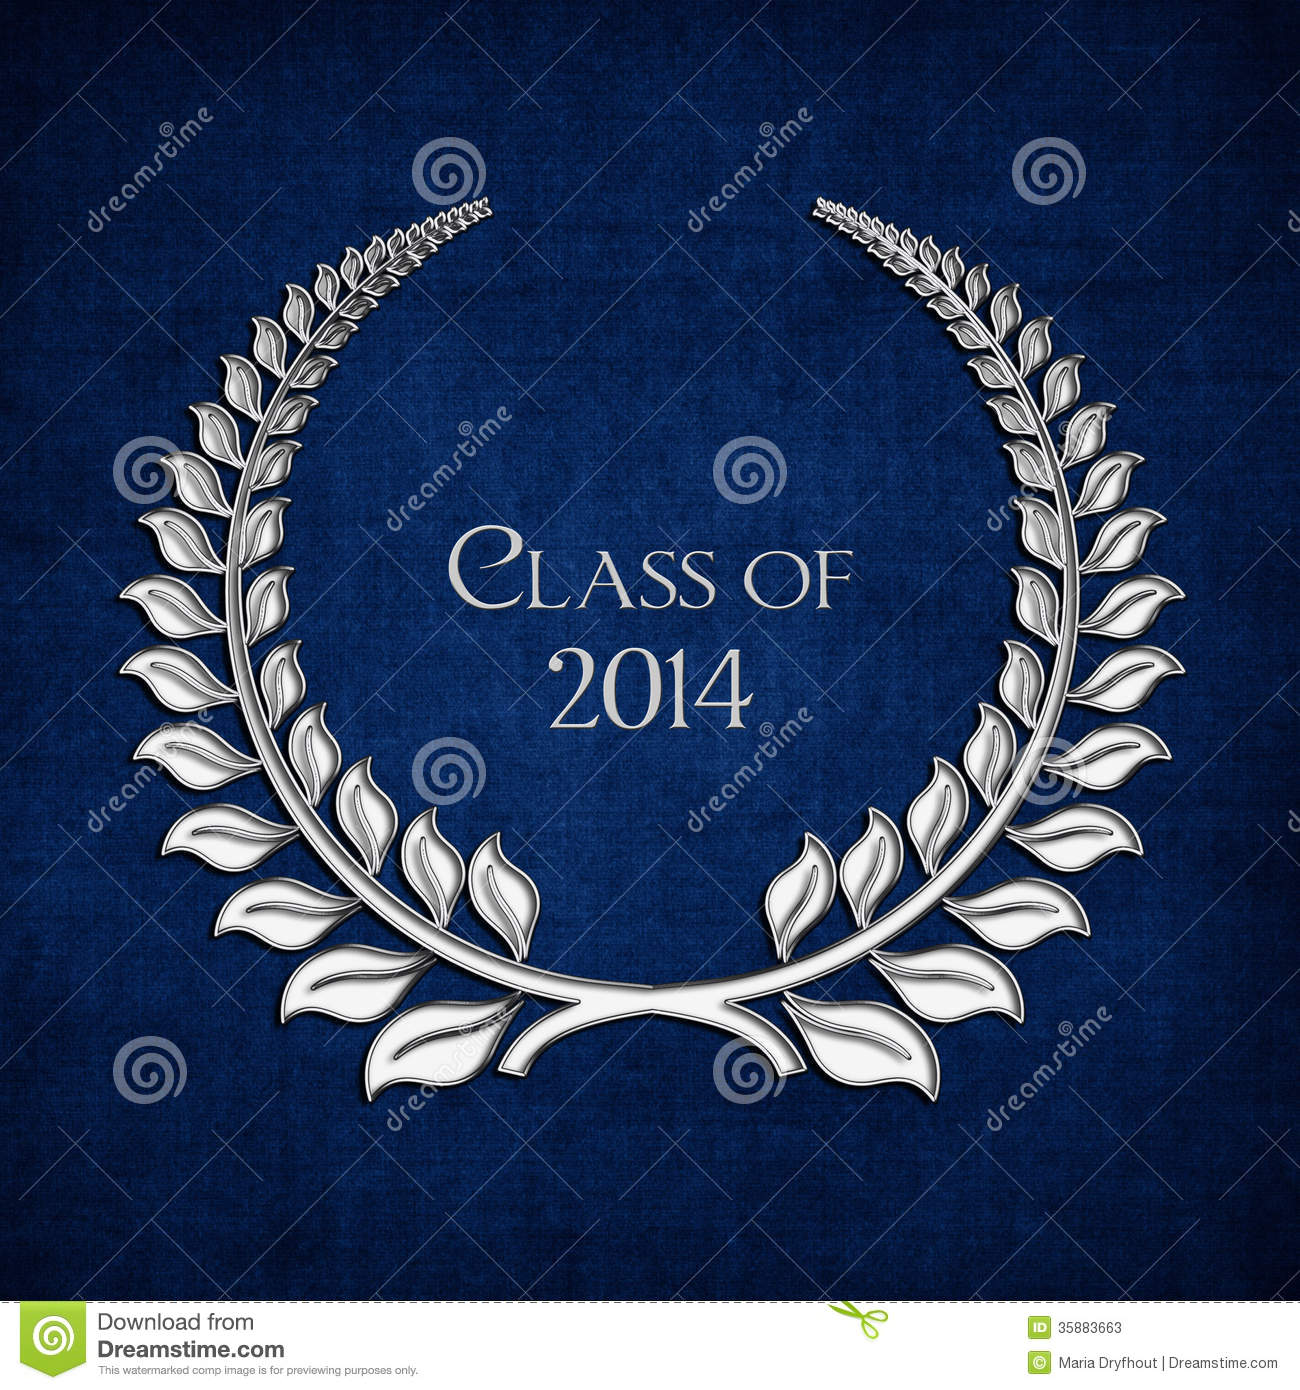 Silver Laurel Symbol On Blue Textured Background For 2014 Graduation 